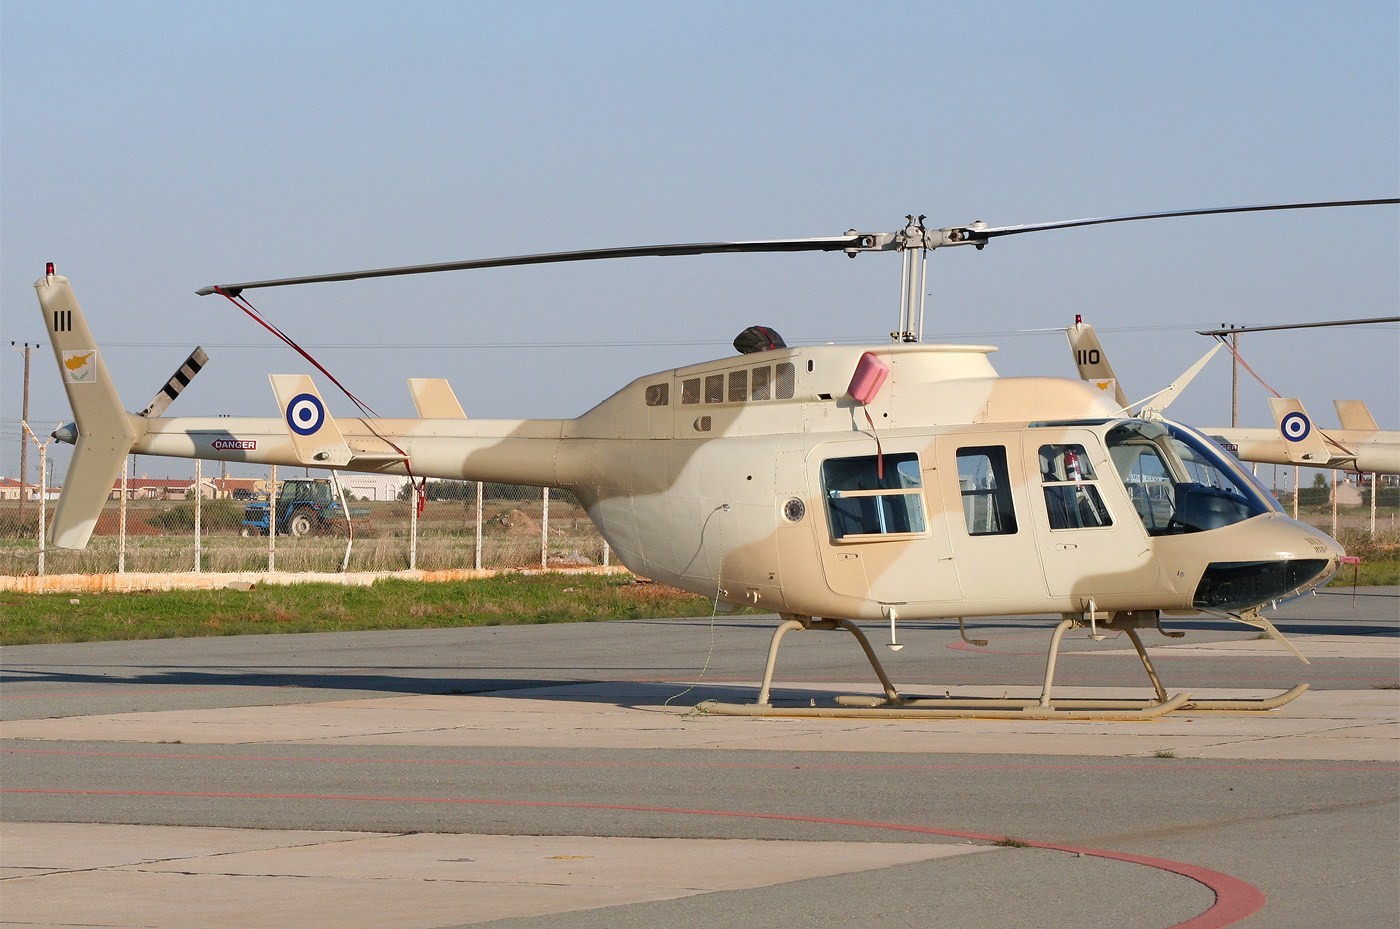 Bell 206L LongRanger previous